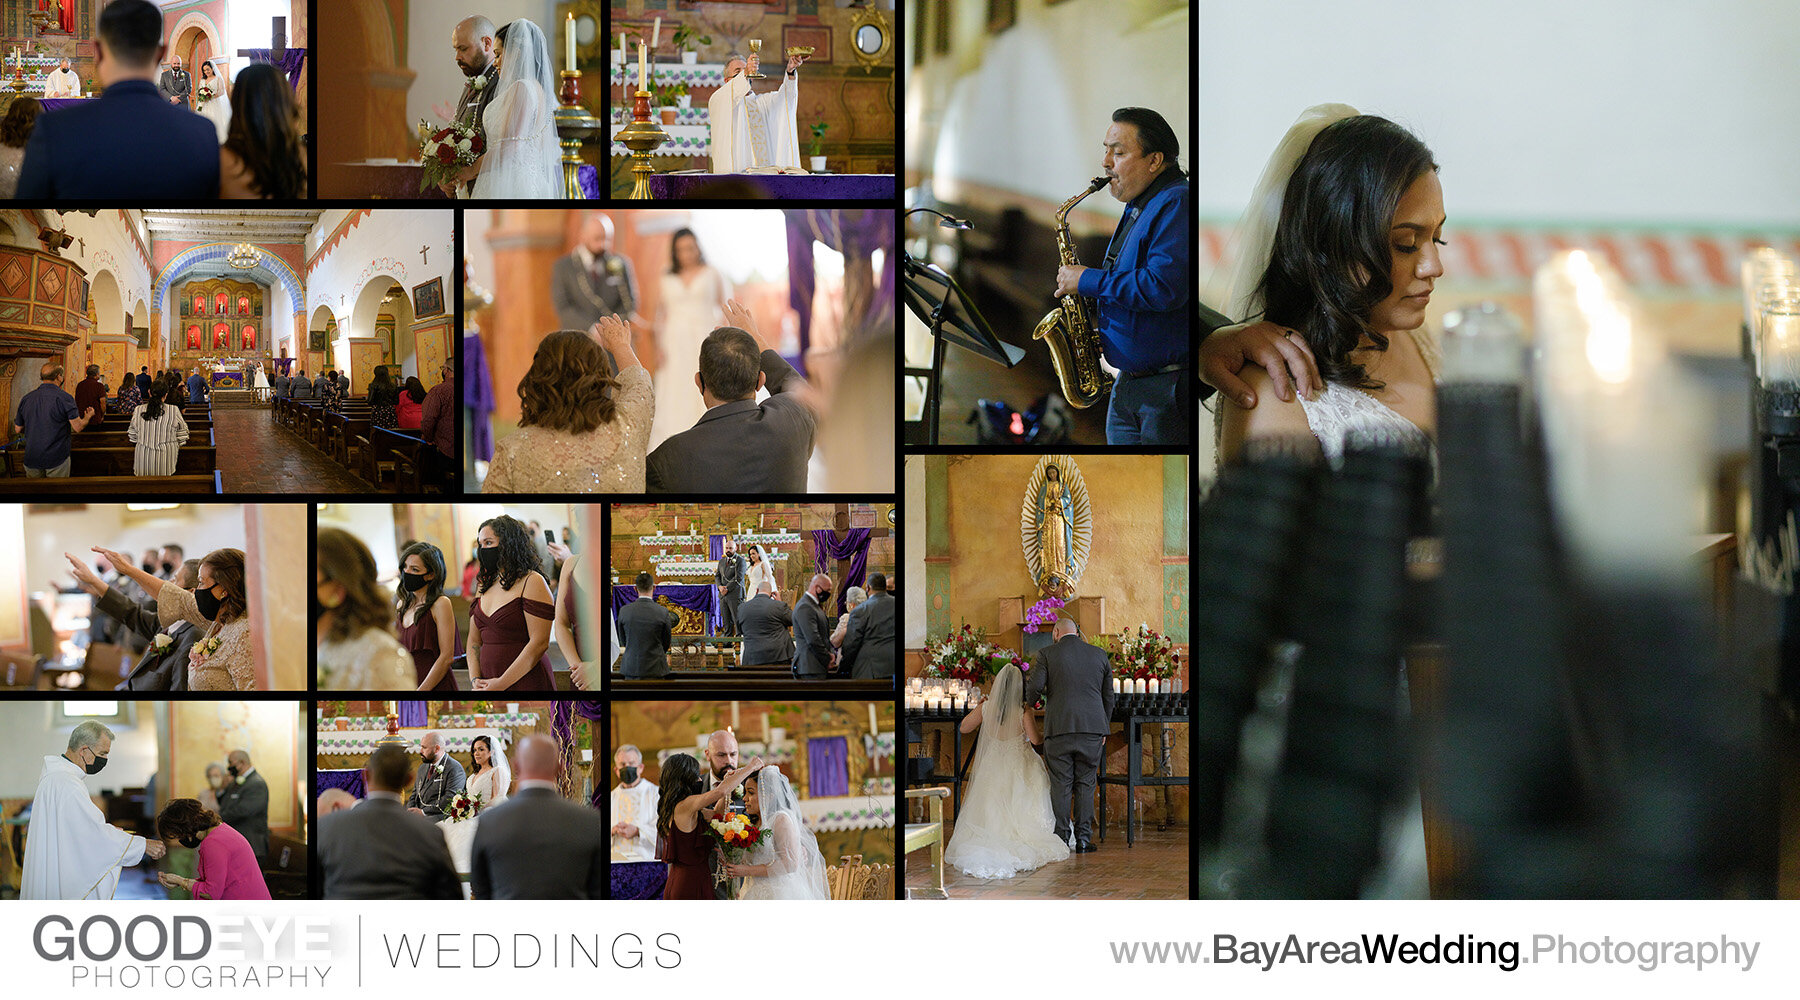 San Juan Bautista Mission Wedding Photography - Leonela and Jose